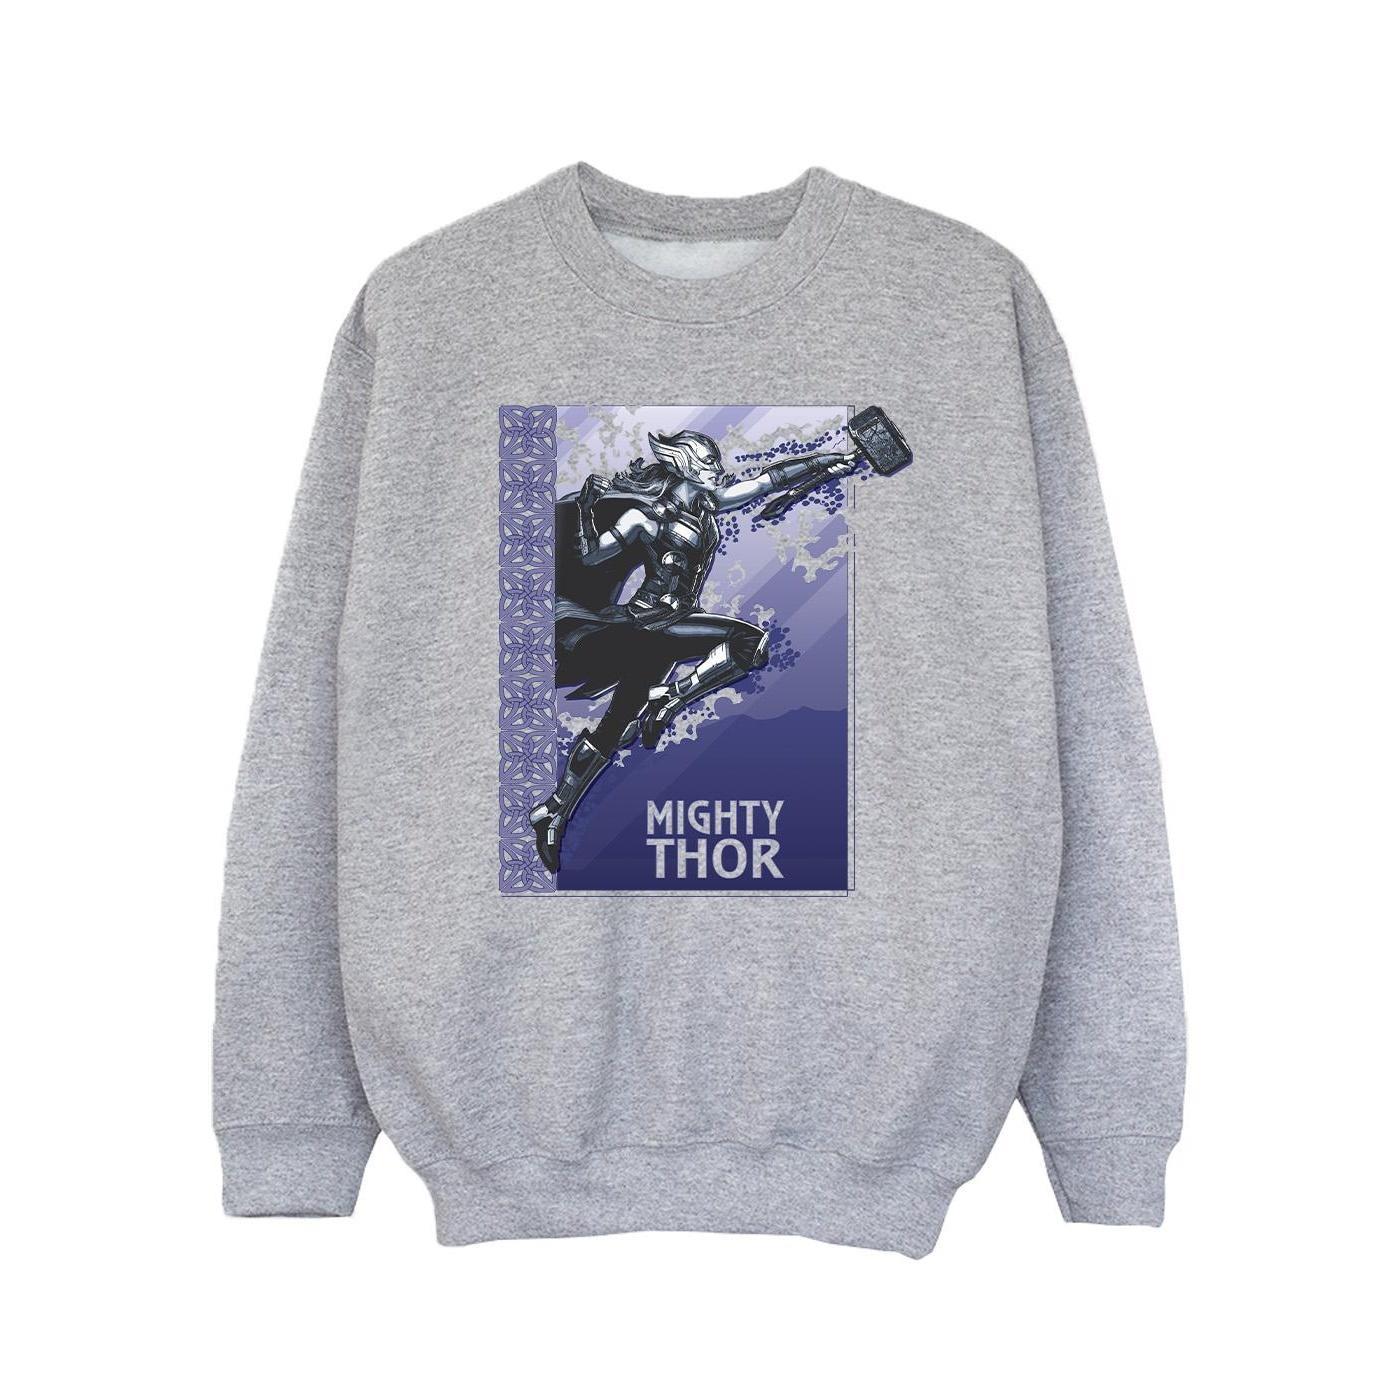 Marvel Girls Thor Love And Thunder Mighty Thor Sweatshirt (Sports Grey) (5-6 Years)